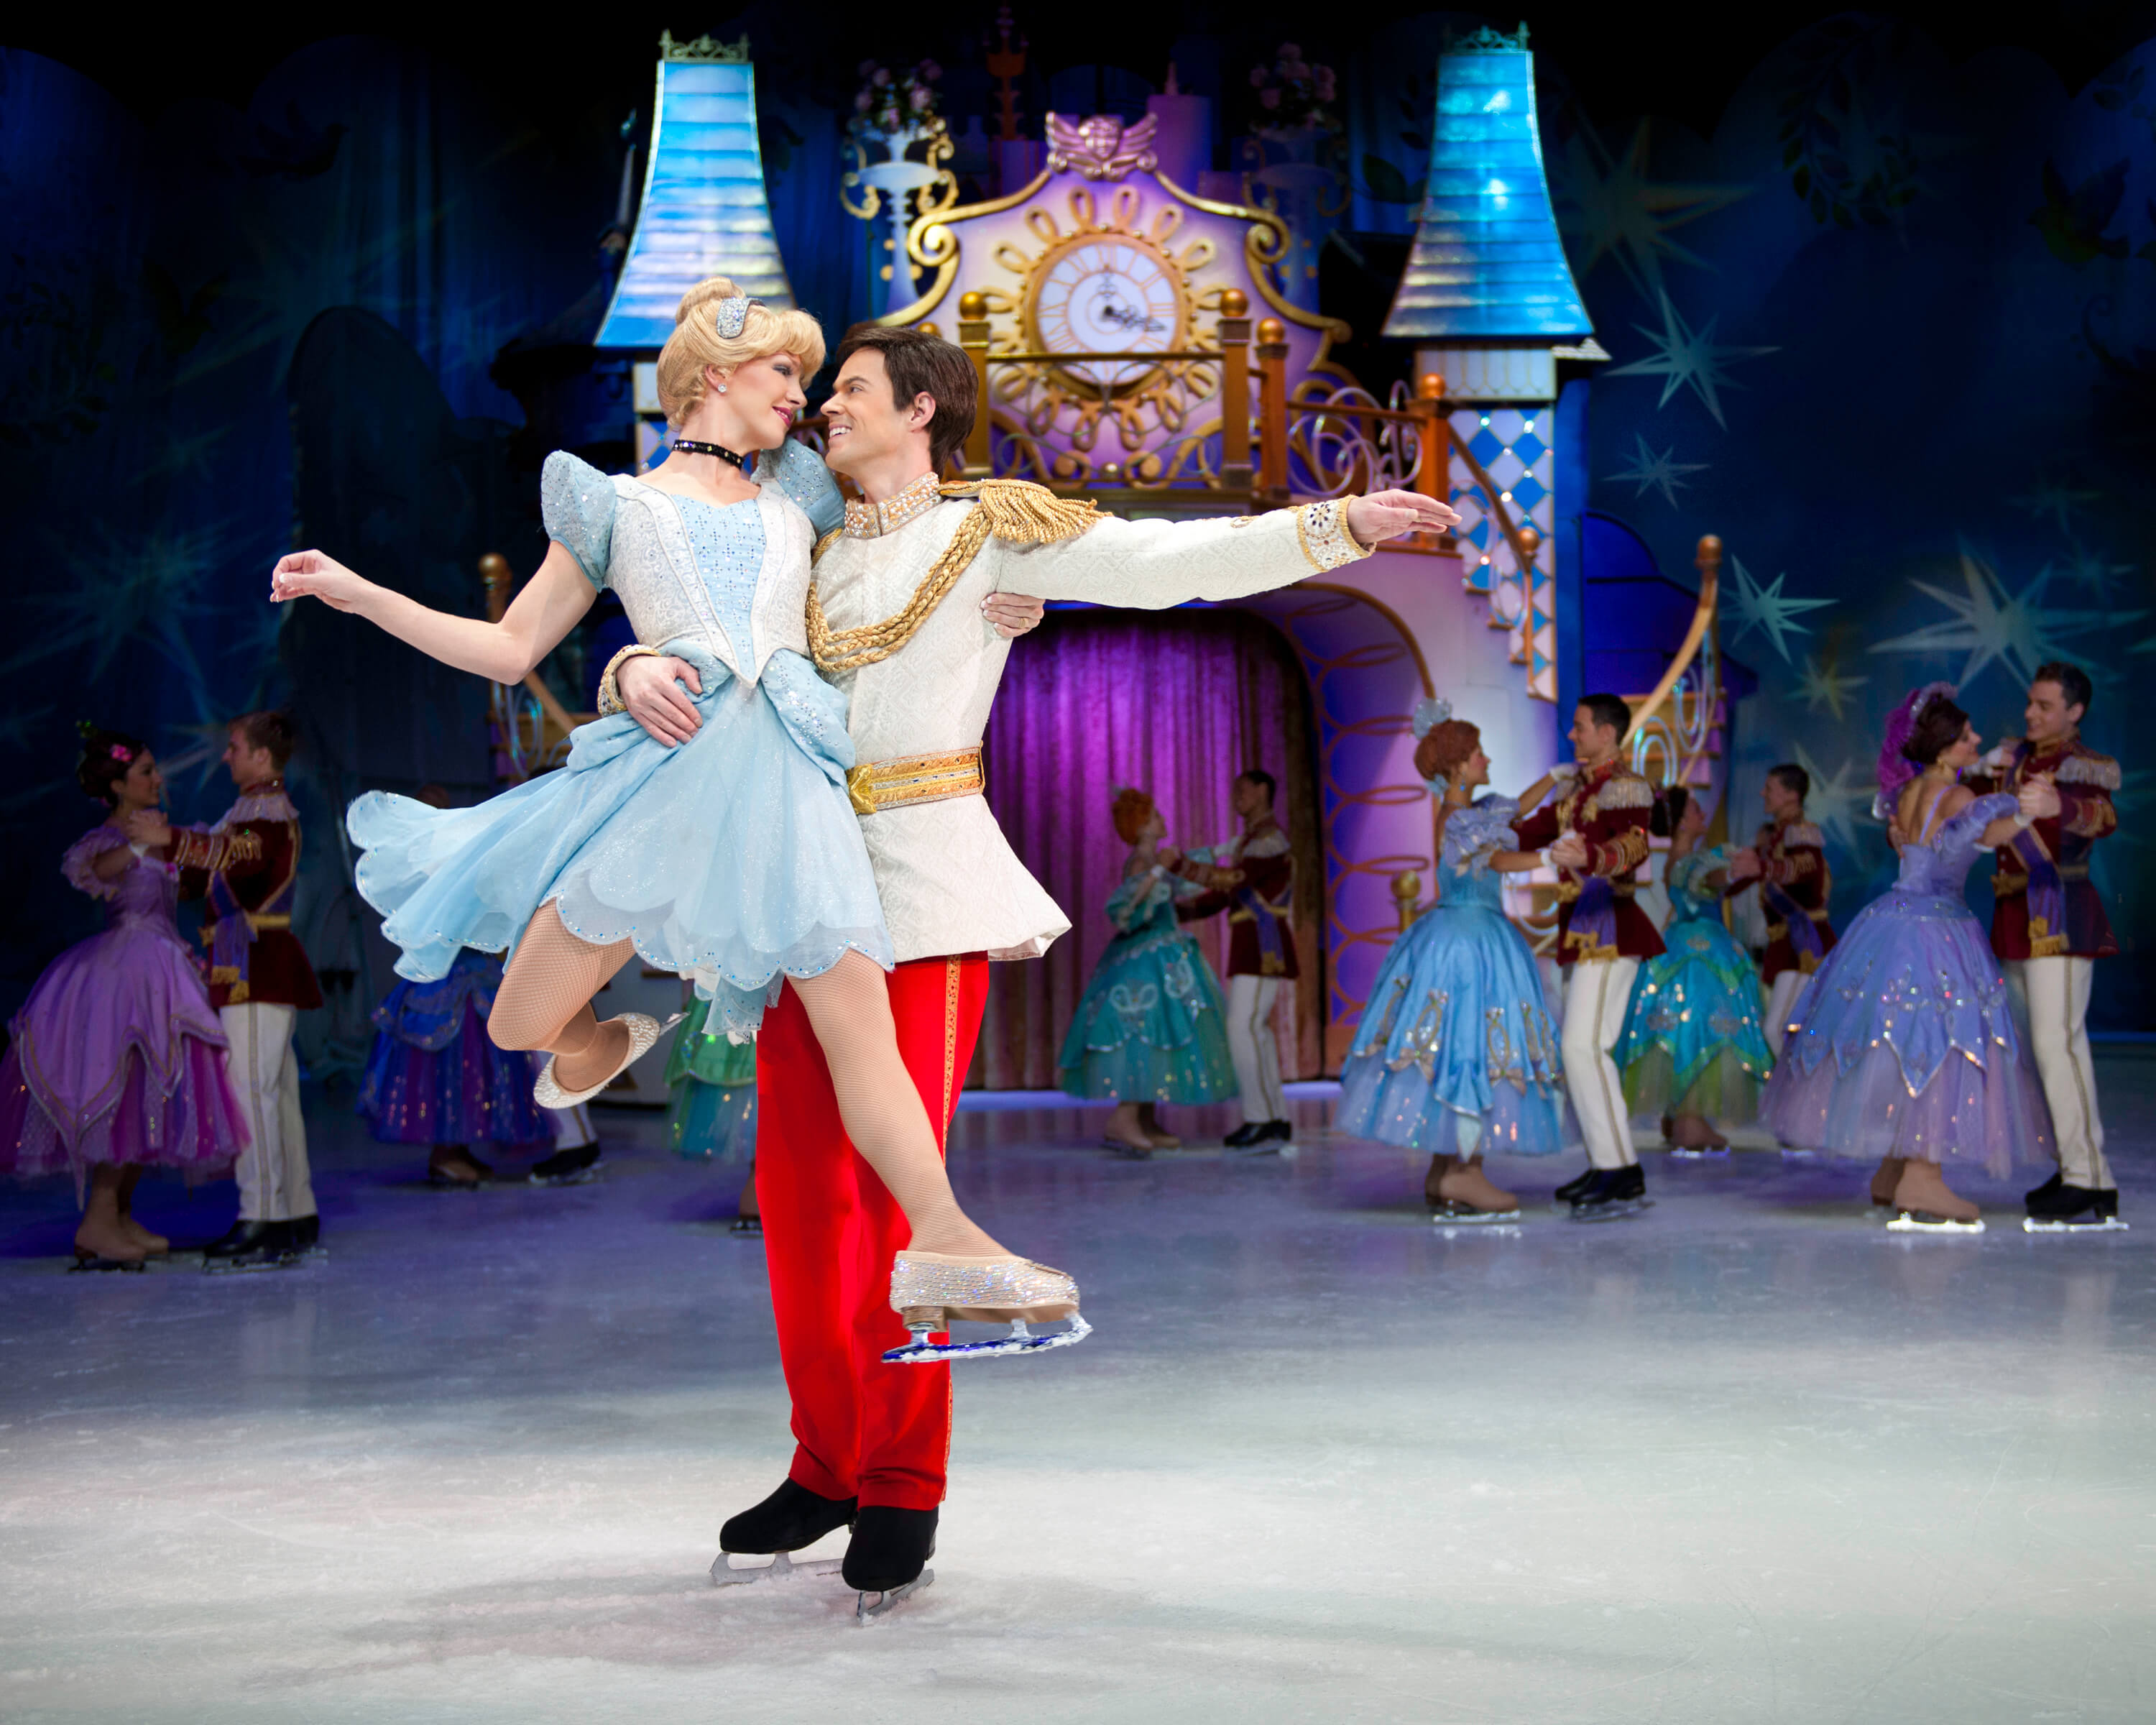 Cinderella and Prince Charming dance at the ball